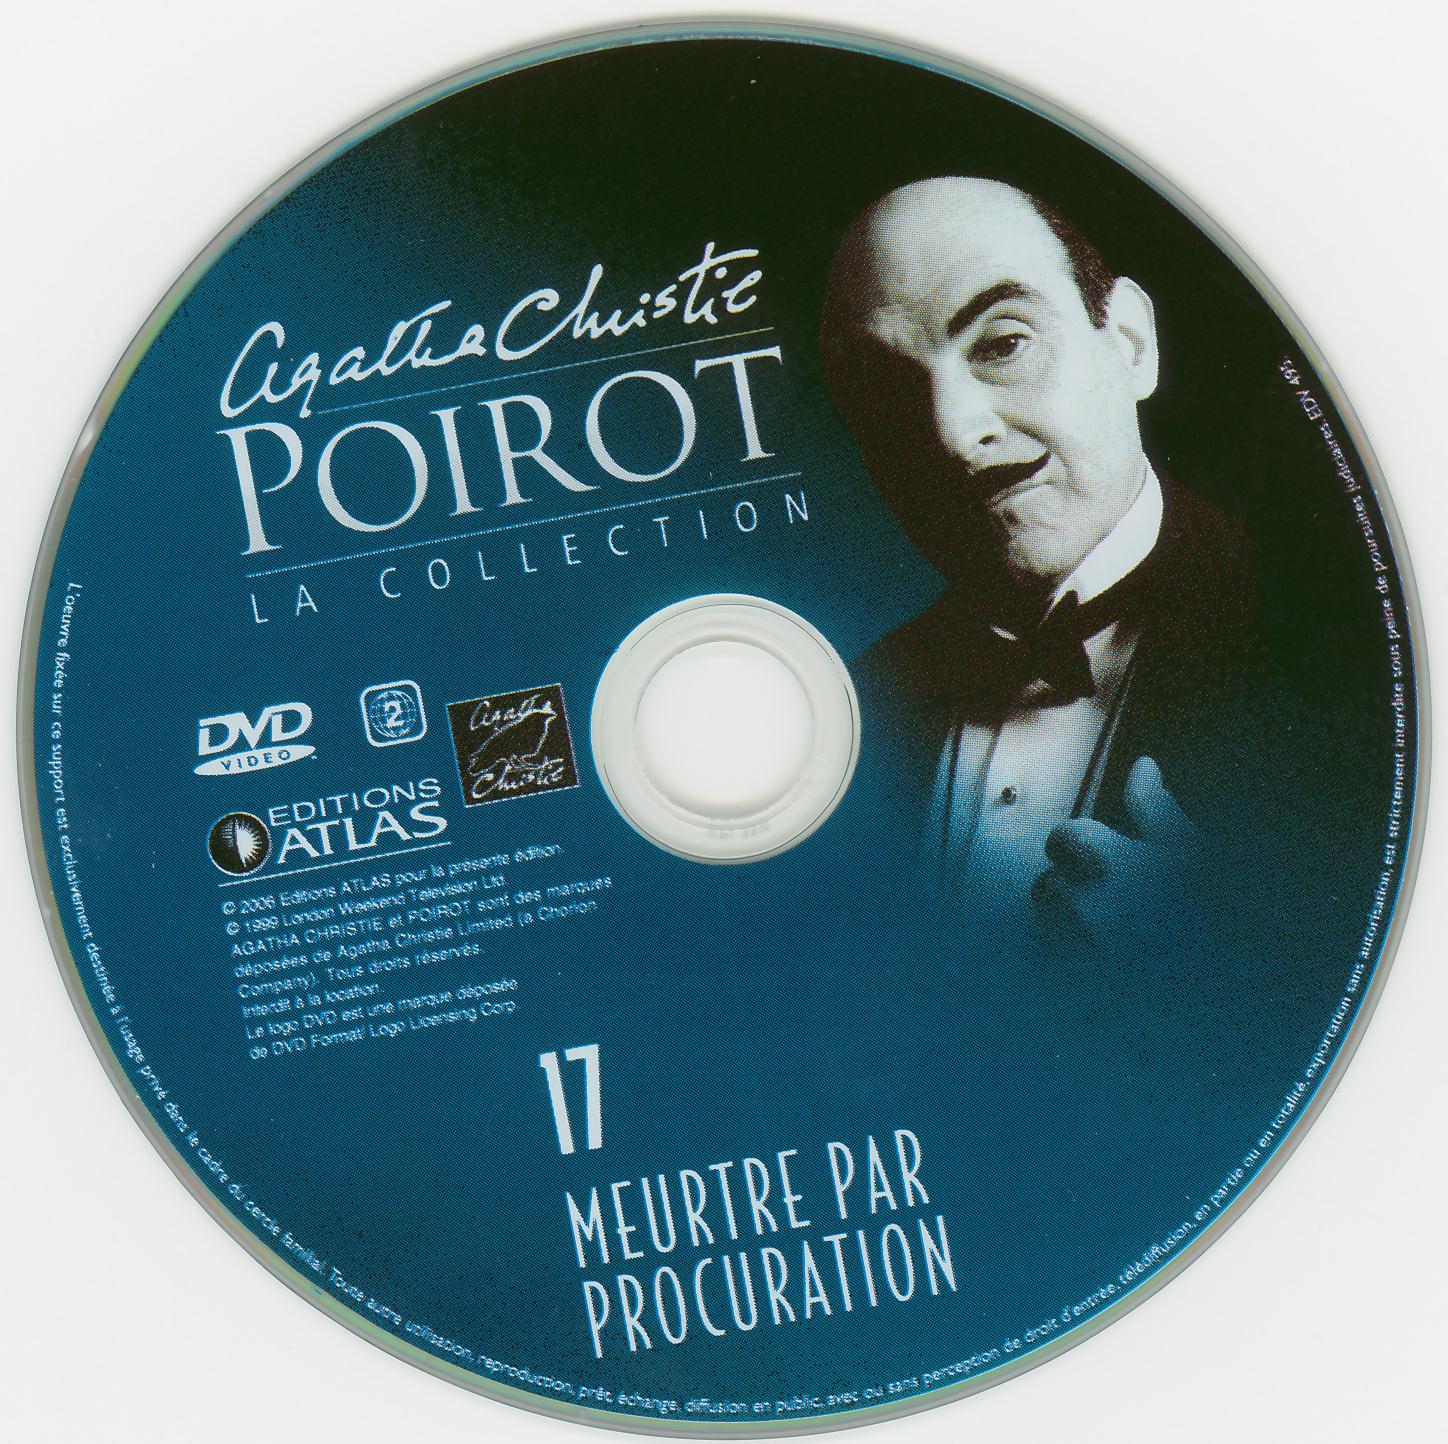 Hercule Poirot vol 17